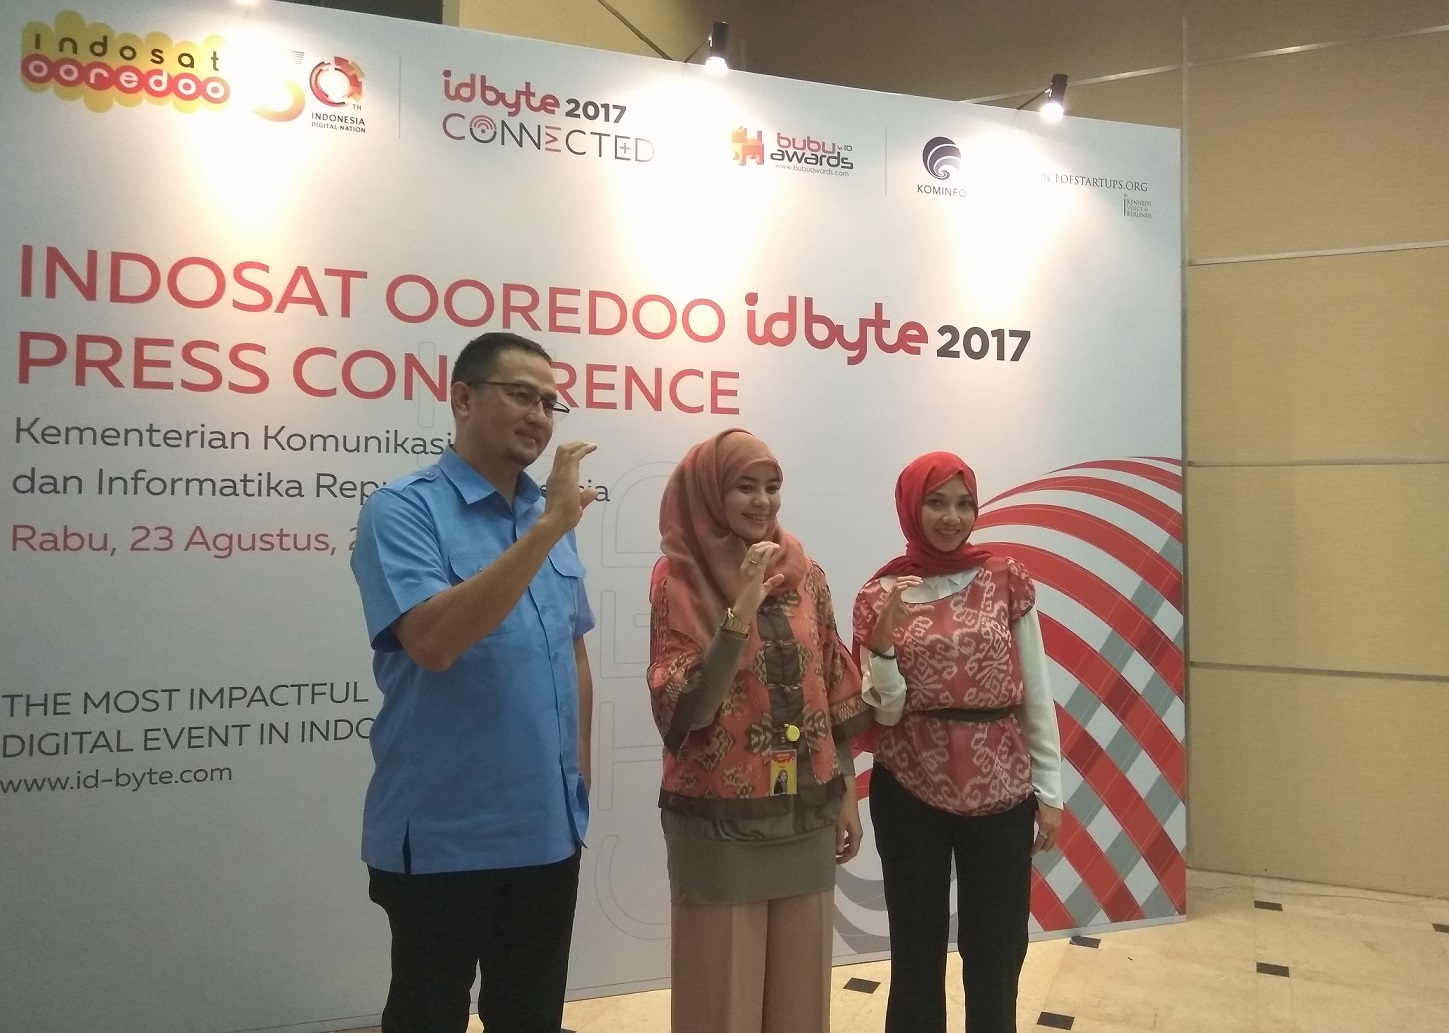 Bubu.com to host Indosat Ooredoo IDByte 2017